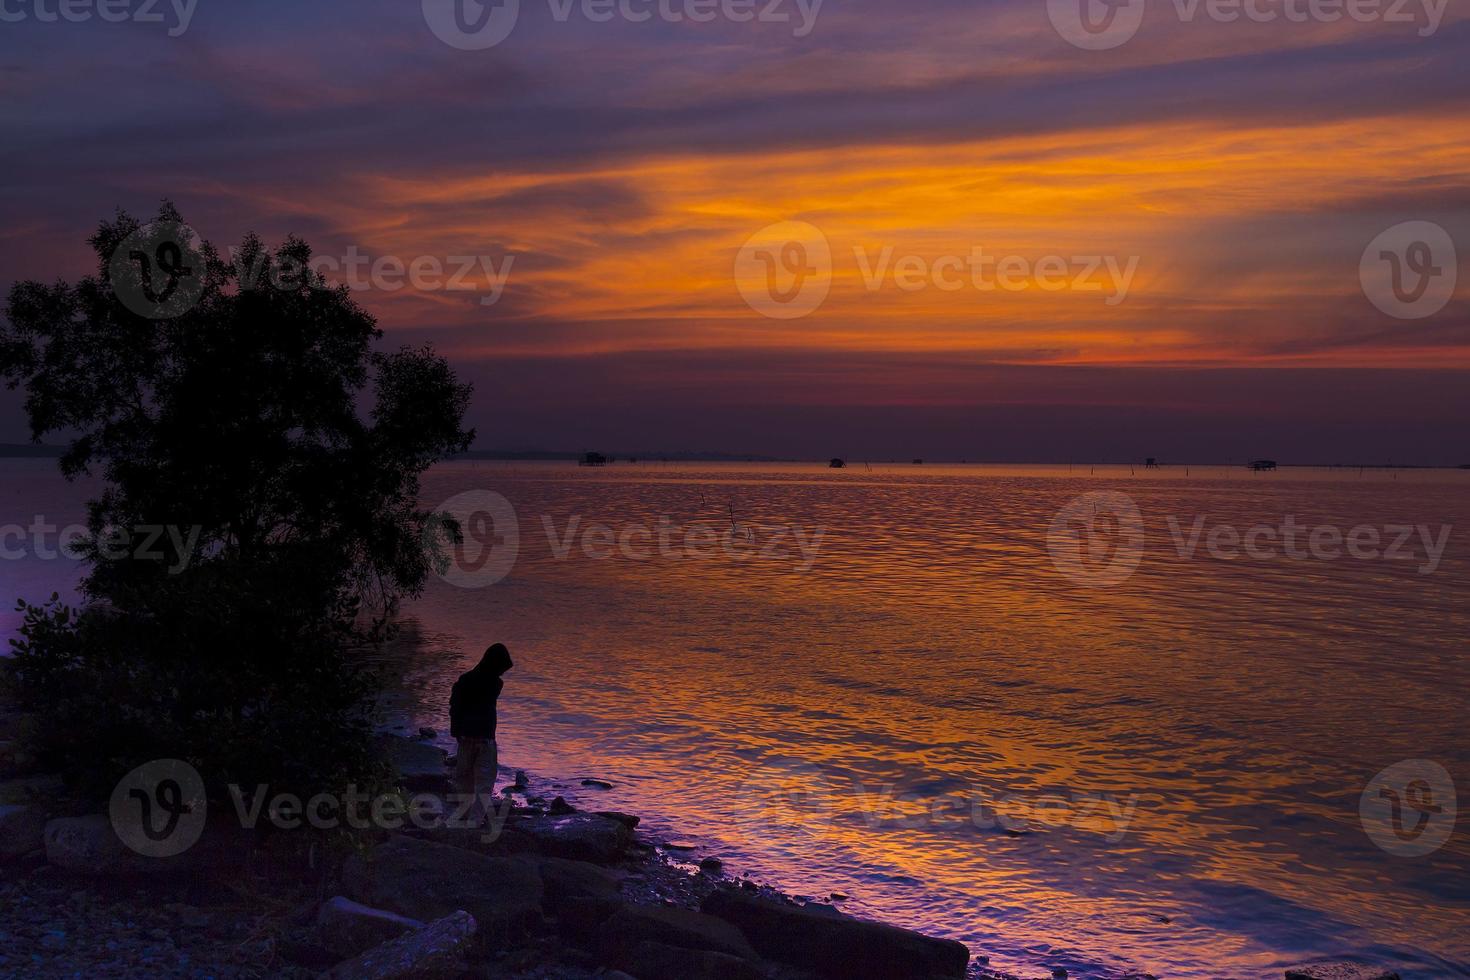 zonsondergang in Thailand foto